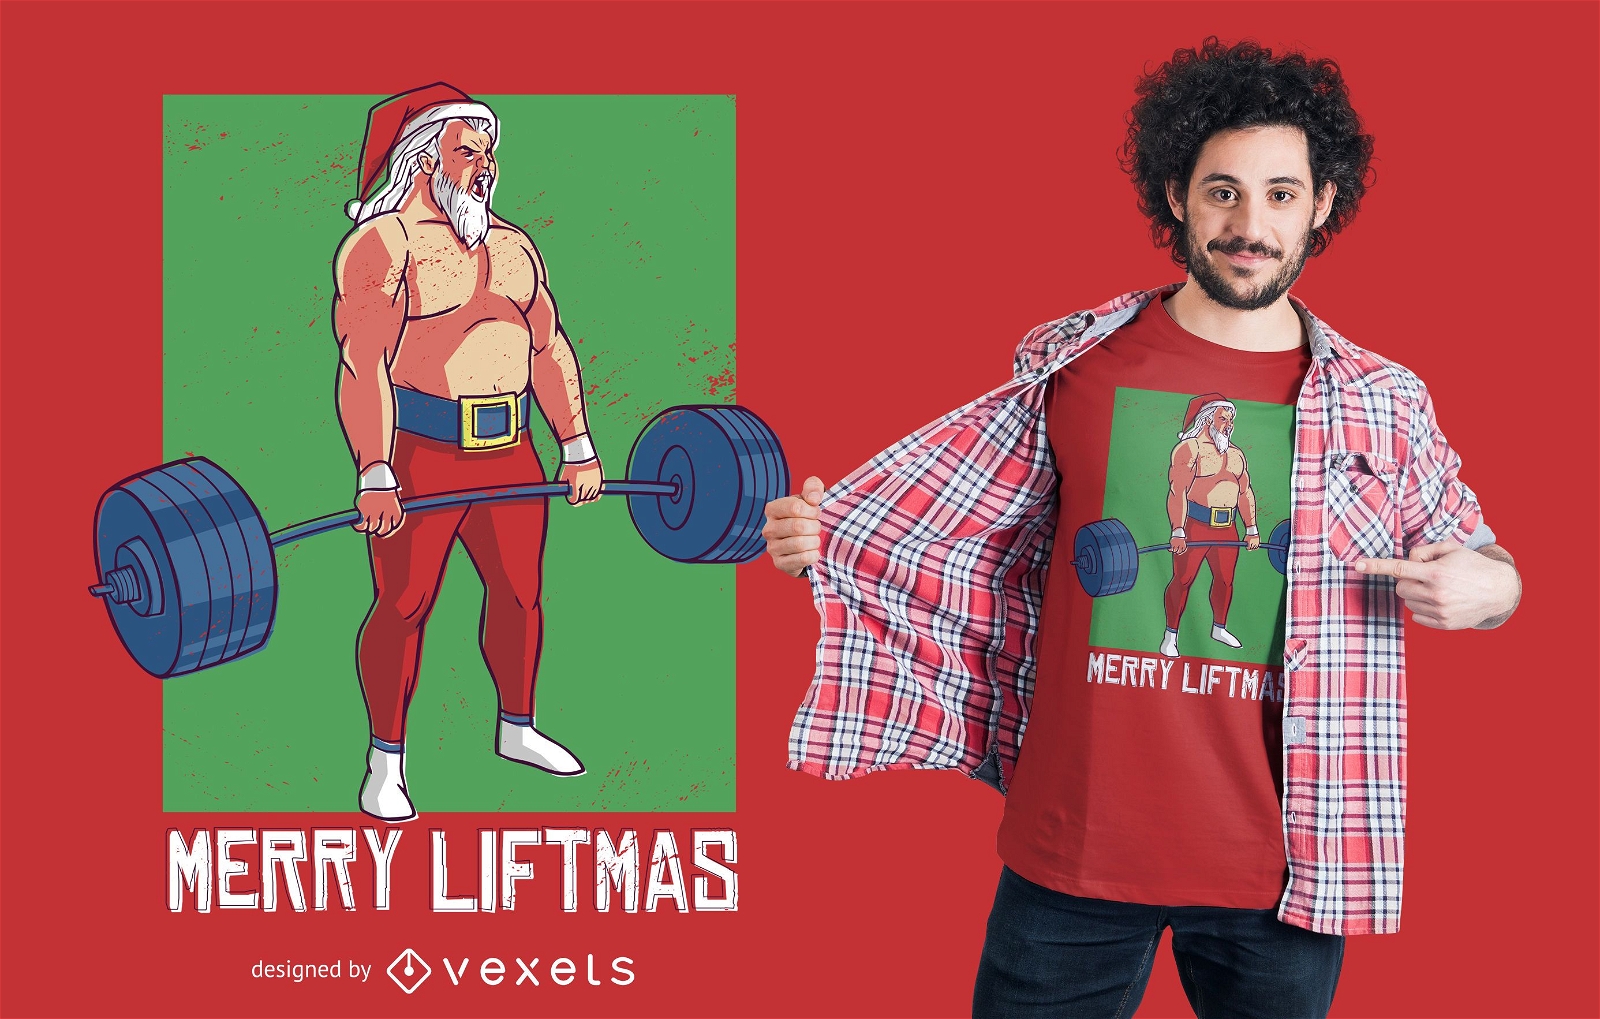 Merry liftmas t-shirt design